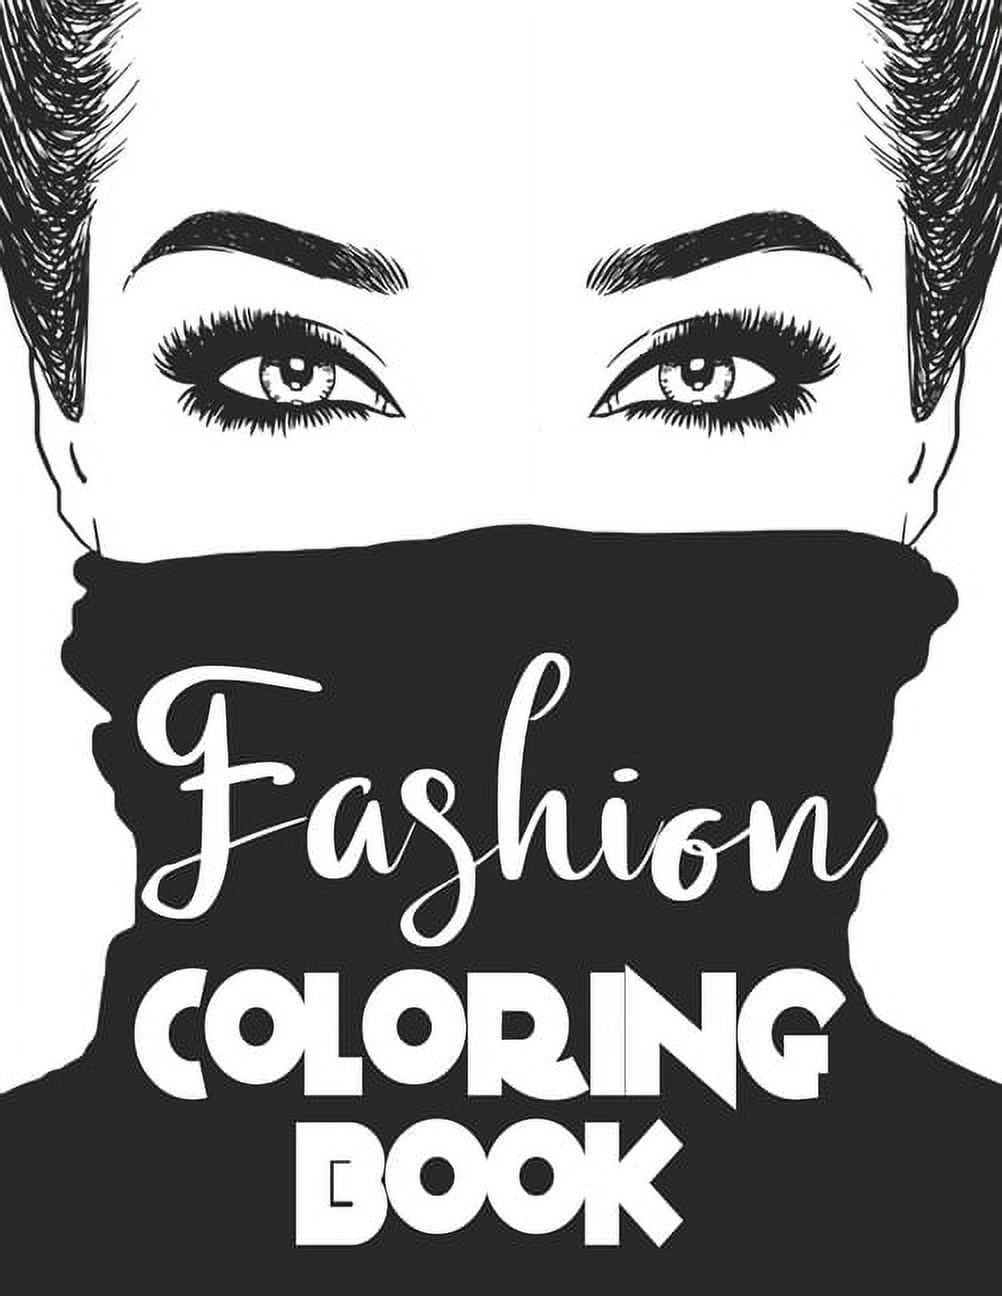 Black Girl Fashion Coloring Book